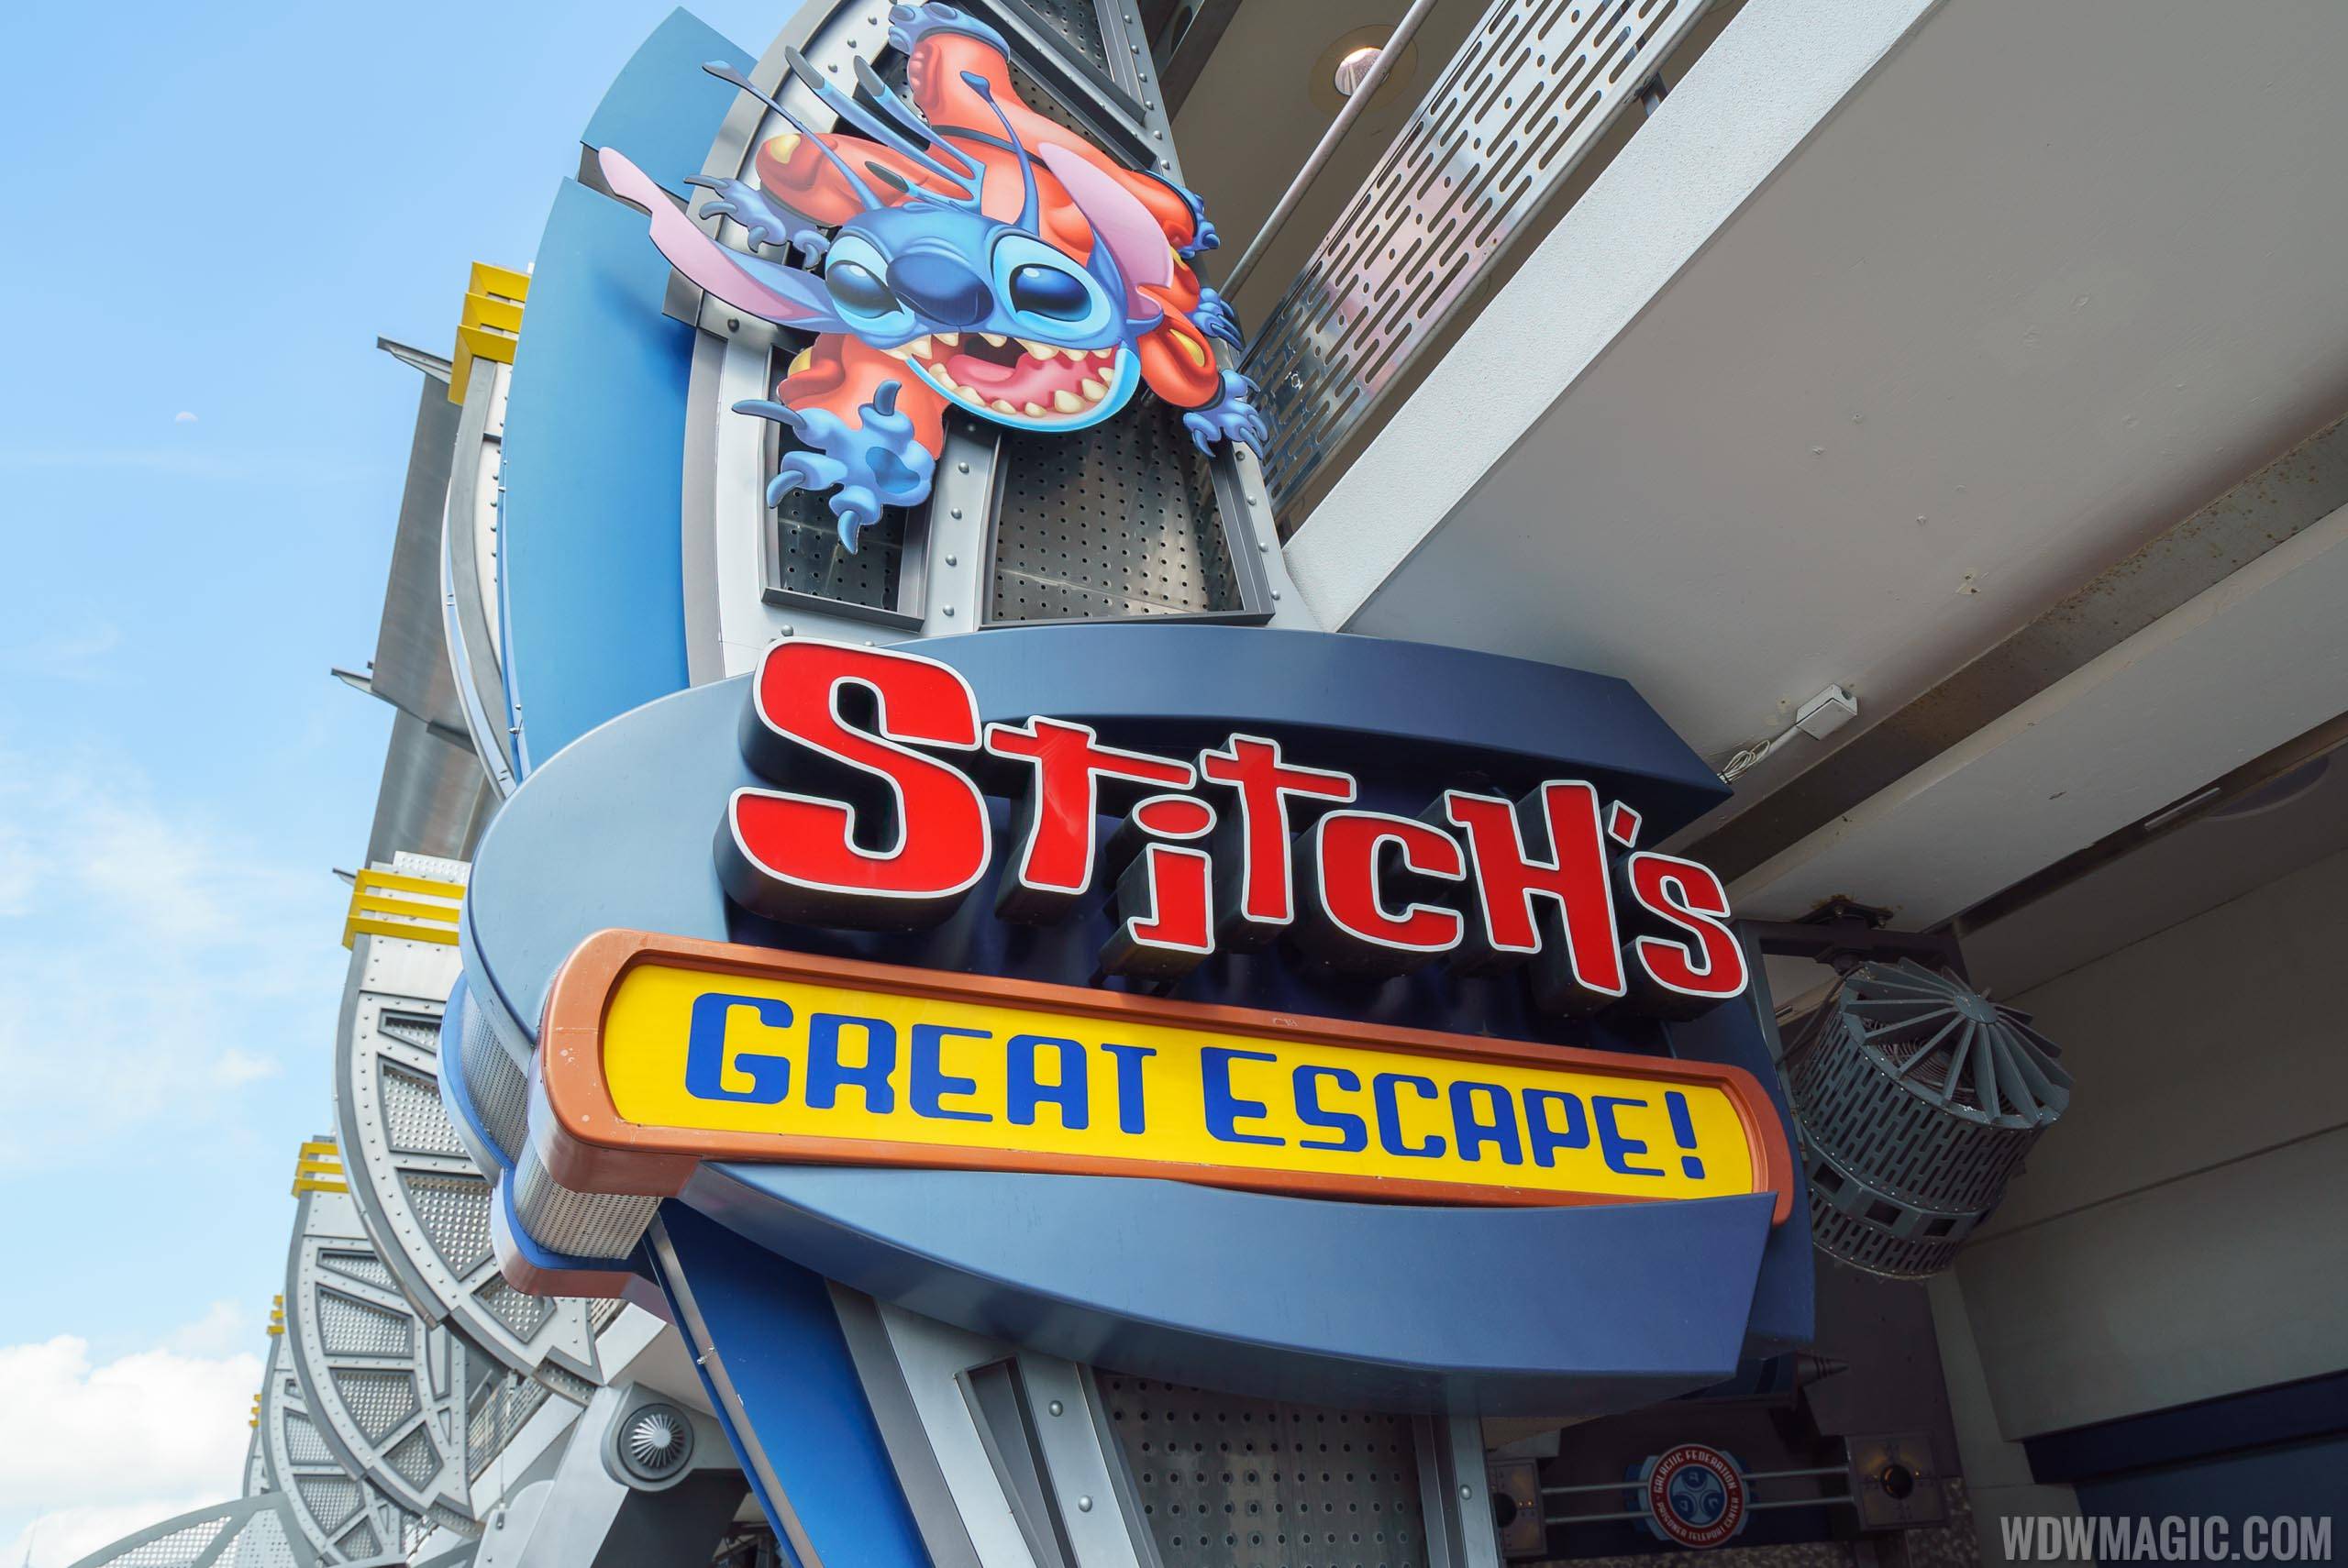 Stitch's Great Escape currently closed for refurbishment